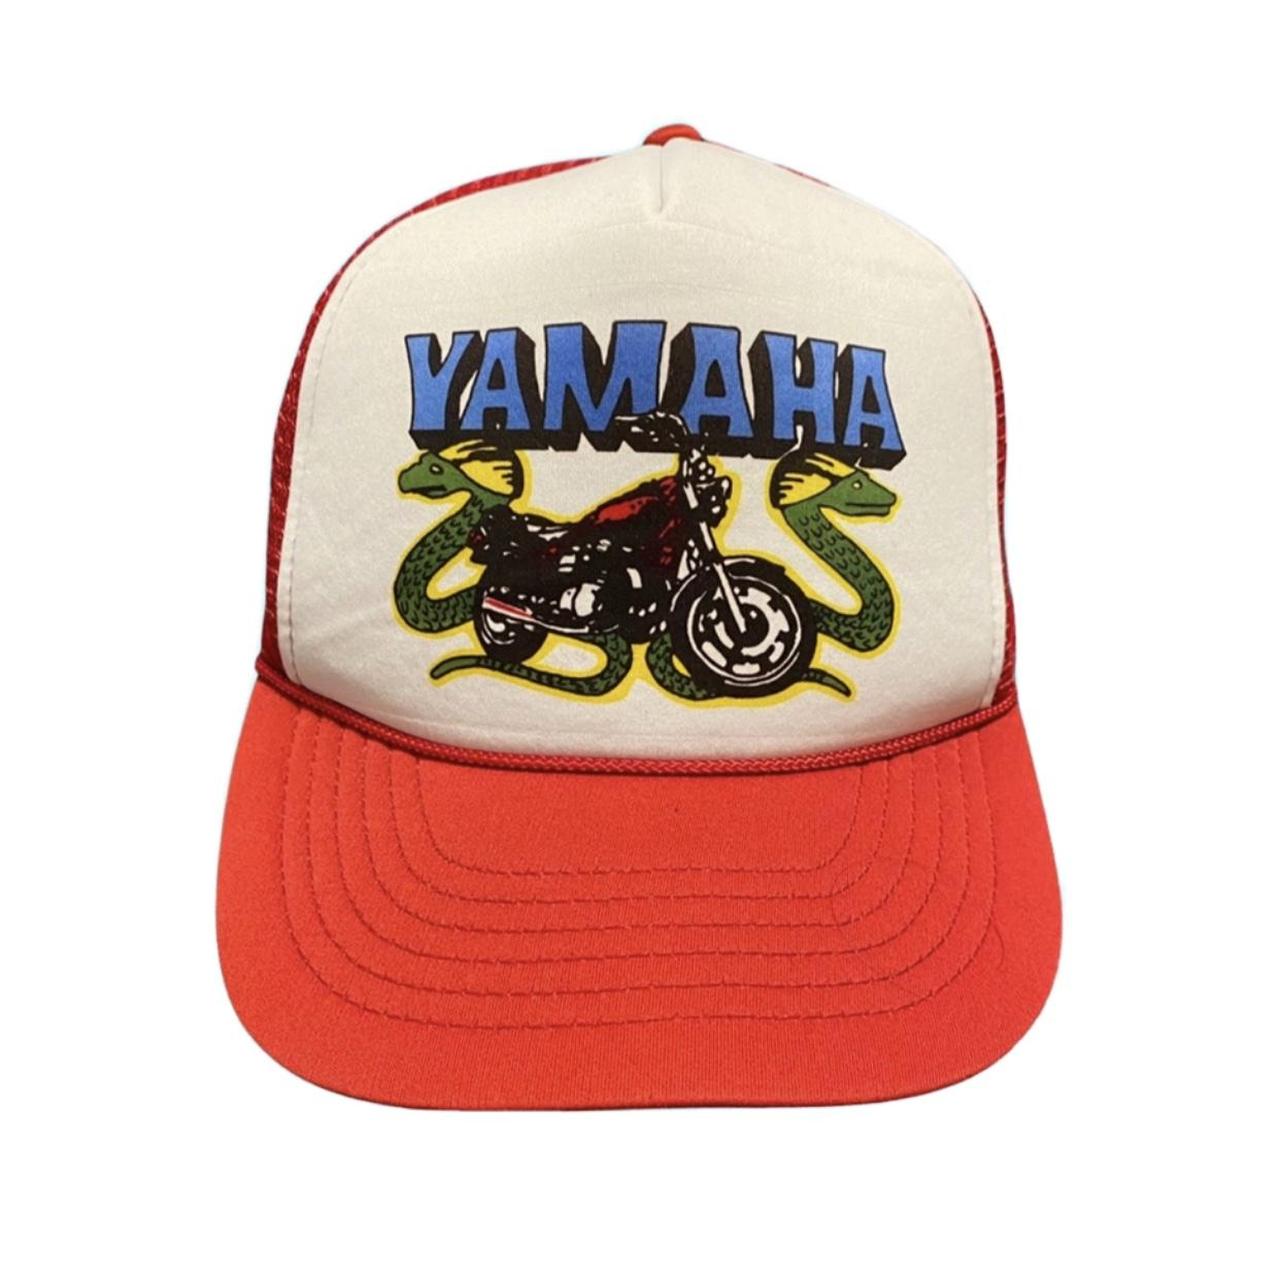 Vintage Yamaha Mesh Trucker Snapback Hat Motorcycle - Depop